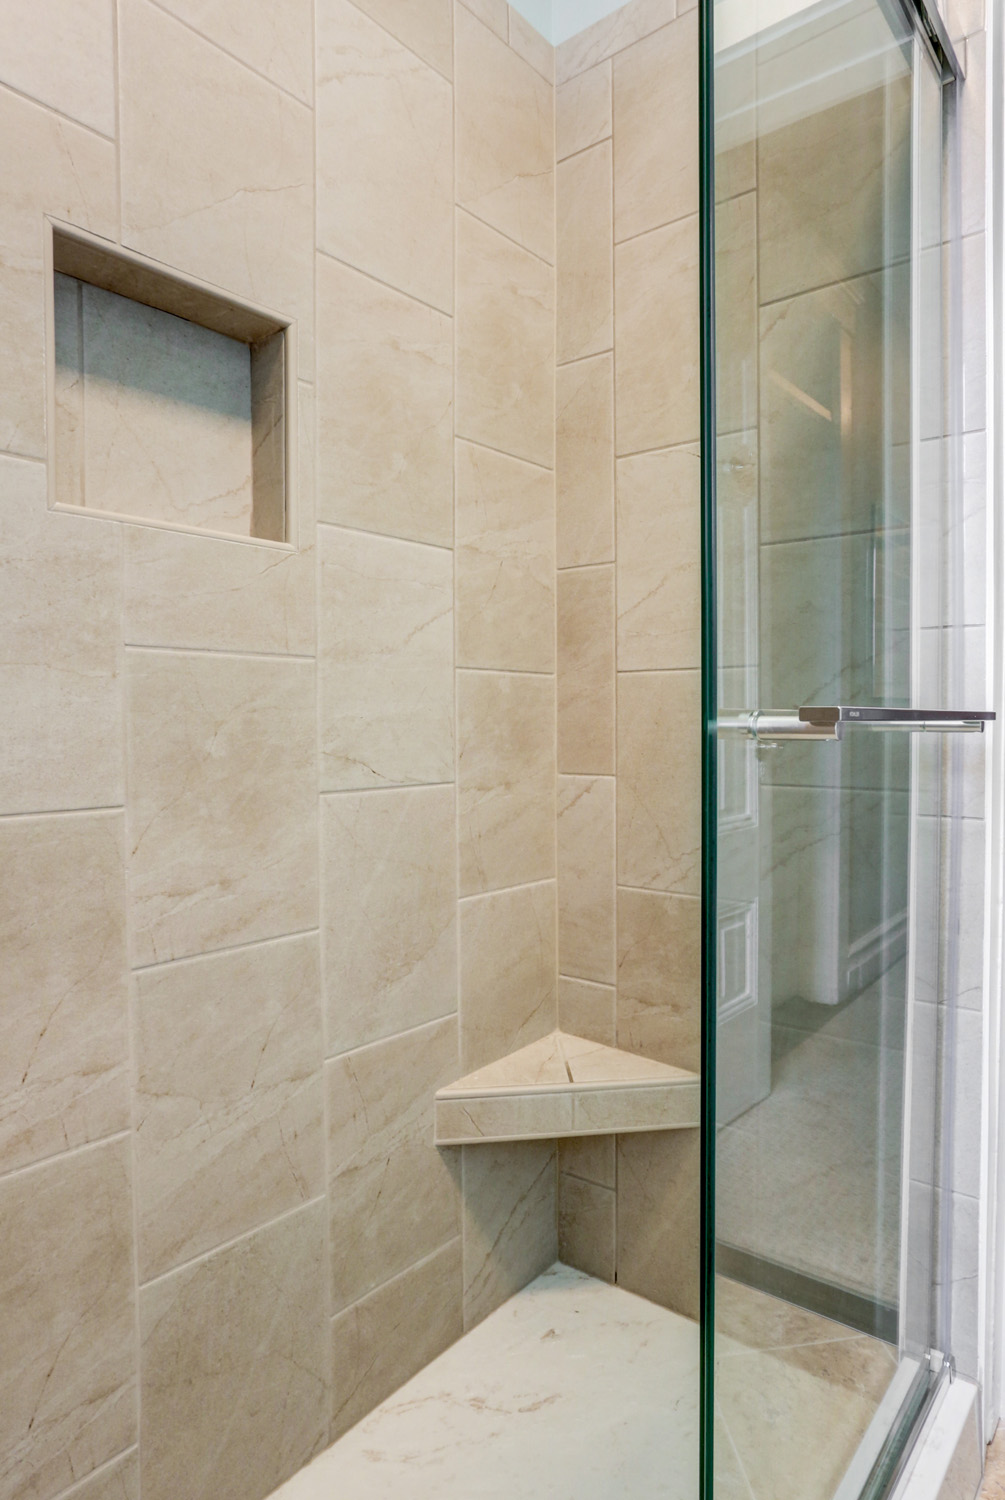 Tile shower walls with built in shelf in Landisville Bathroom Remodel